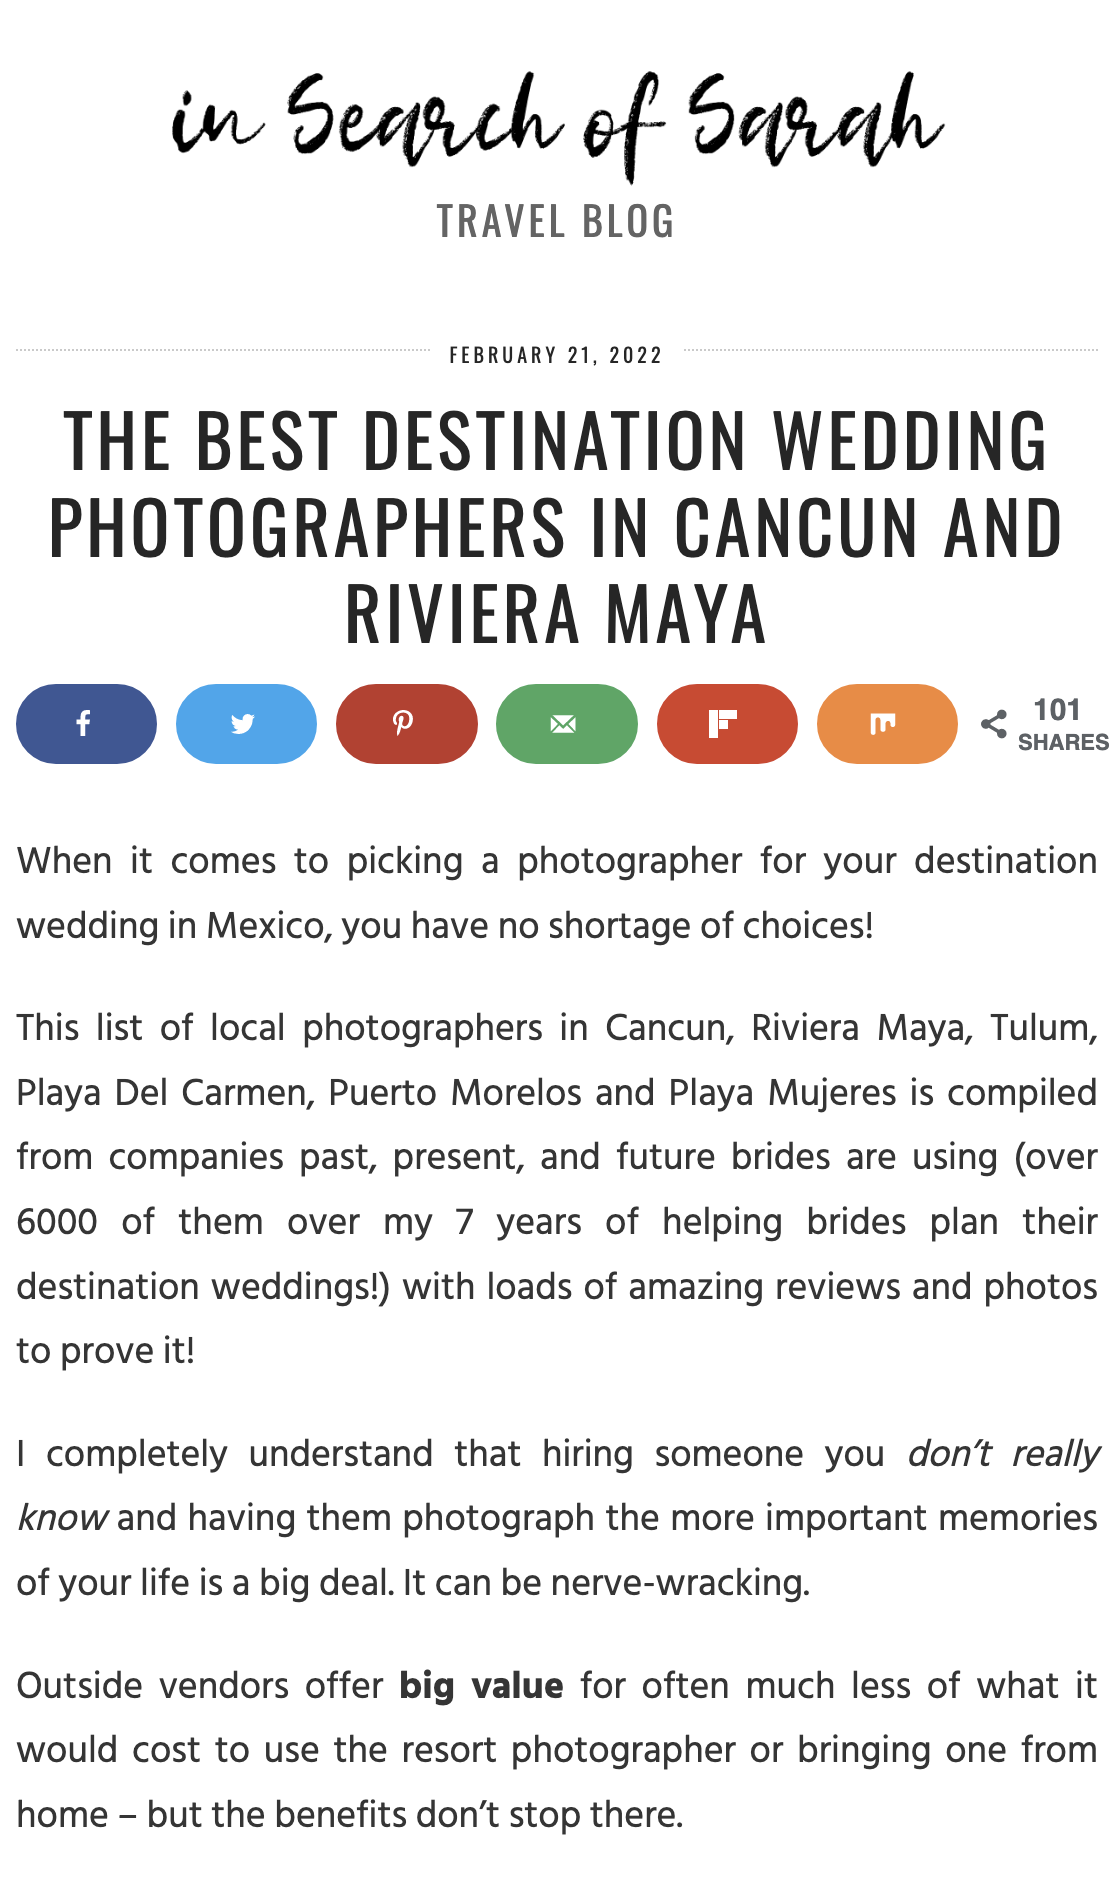 THE BEST DESTINATION WEDDING PHOTOGRAPHERS IN CANCUN AND RIVIERA MAYA